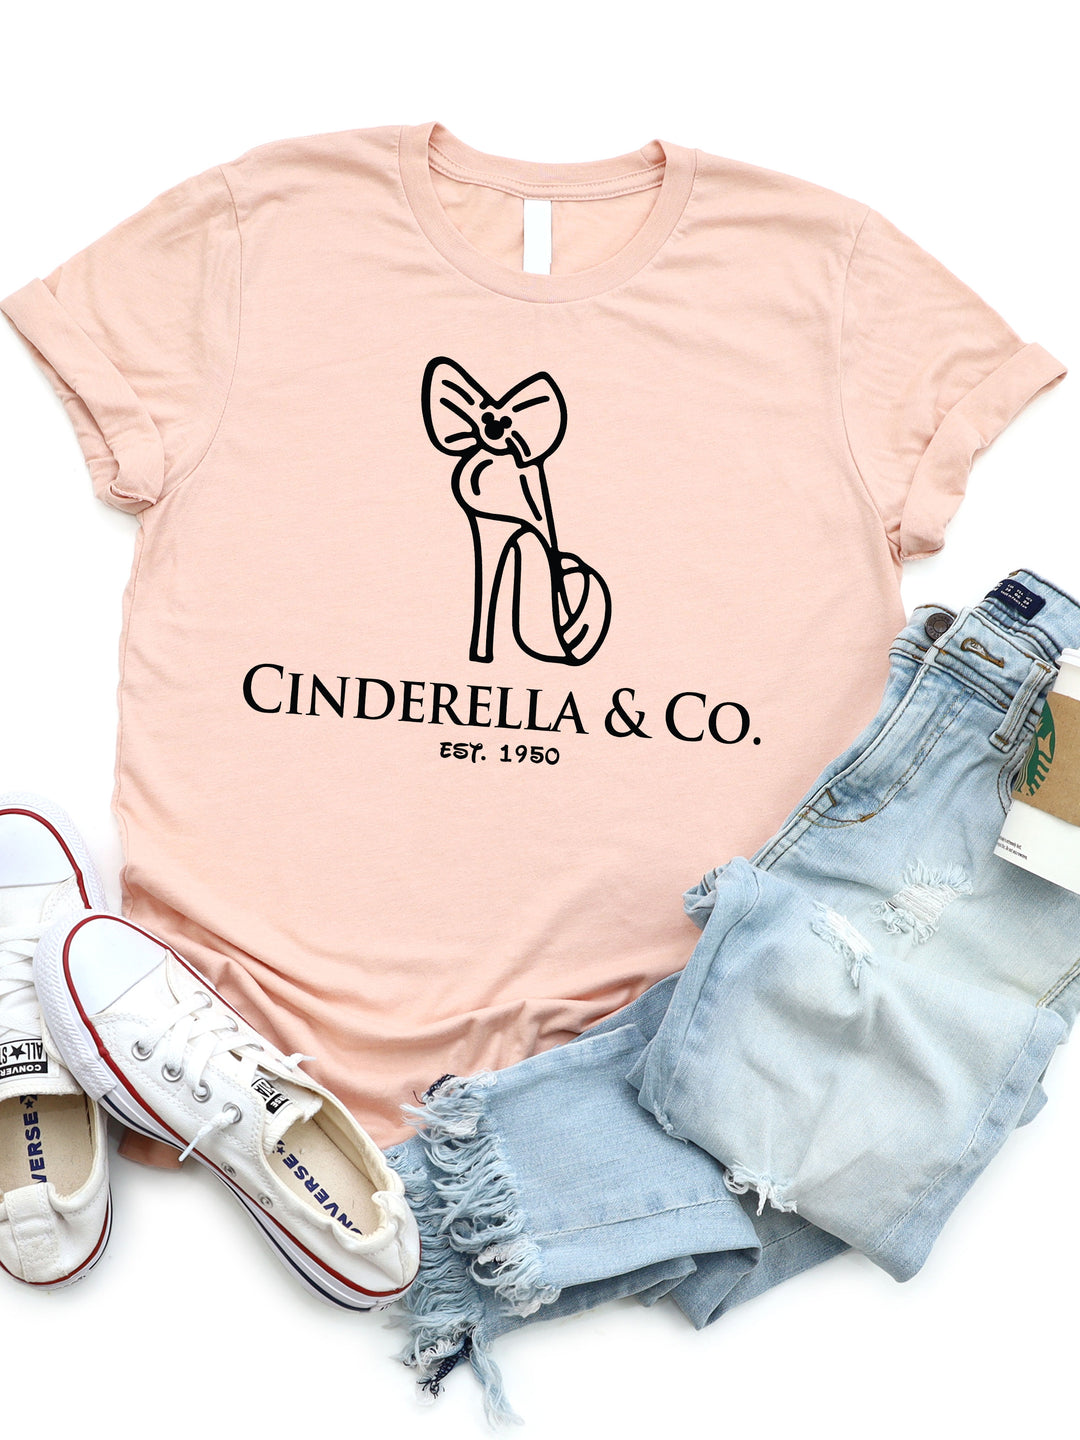 Cinderella & Co. Glass Slipper Graphic Tee